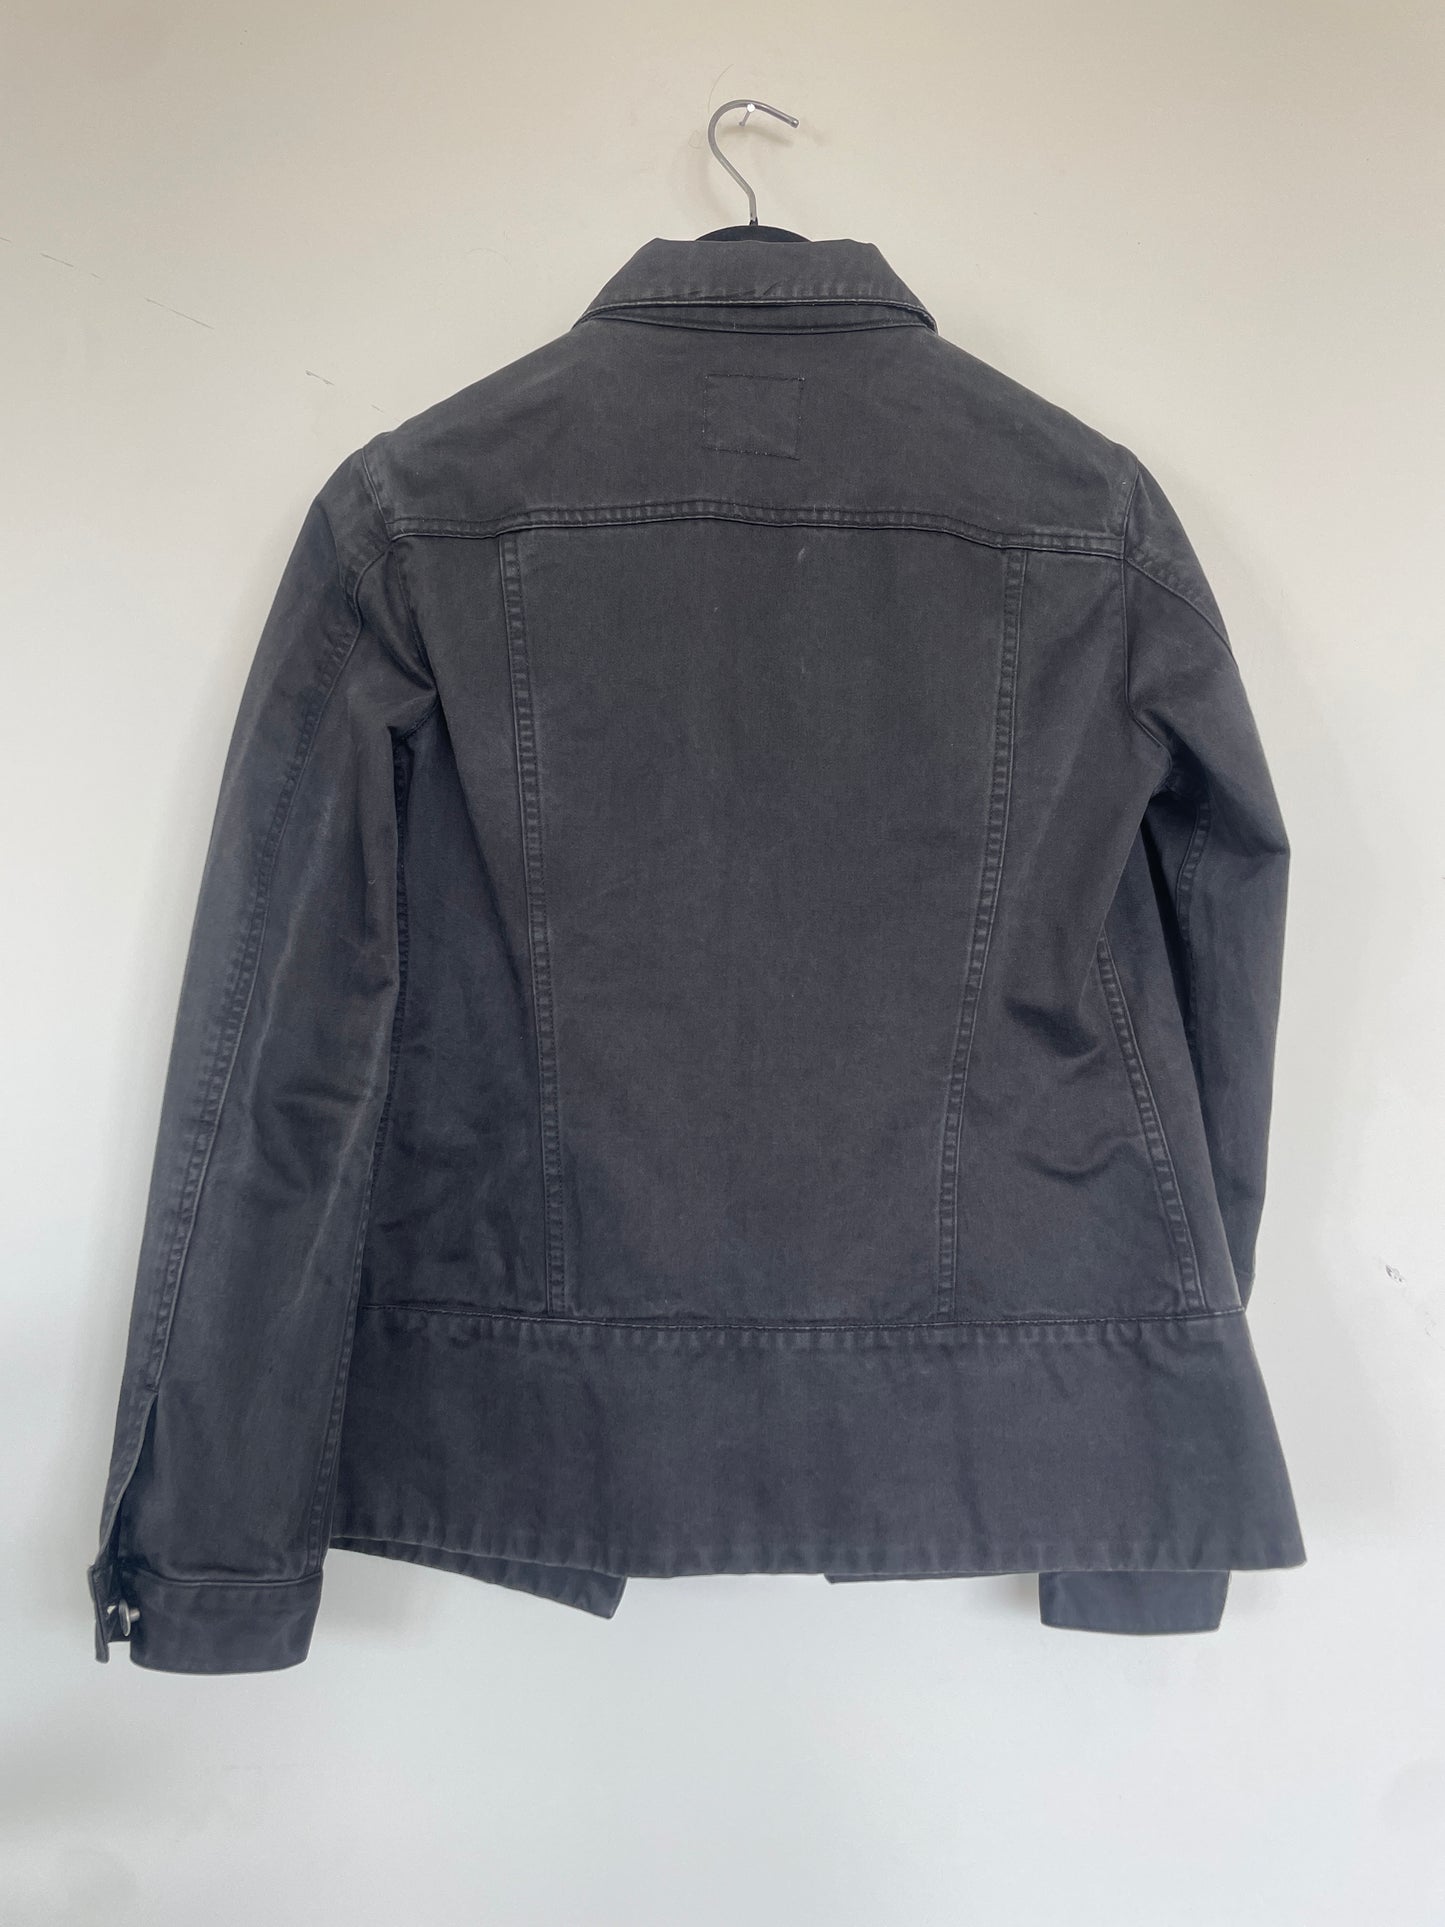 Helmut Lang 1997 dark grey denim jacket